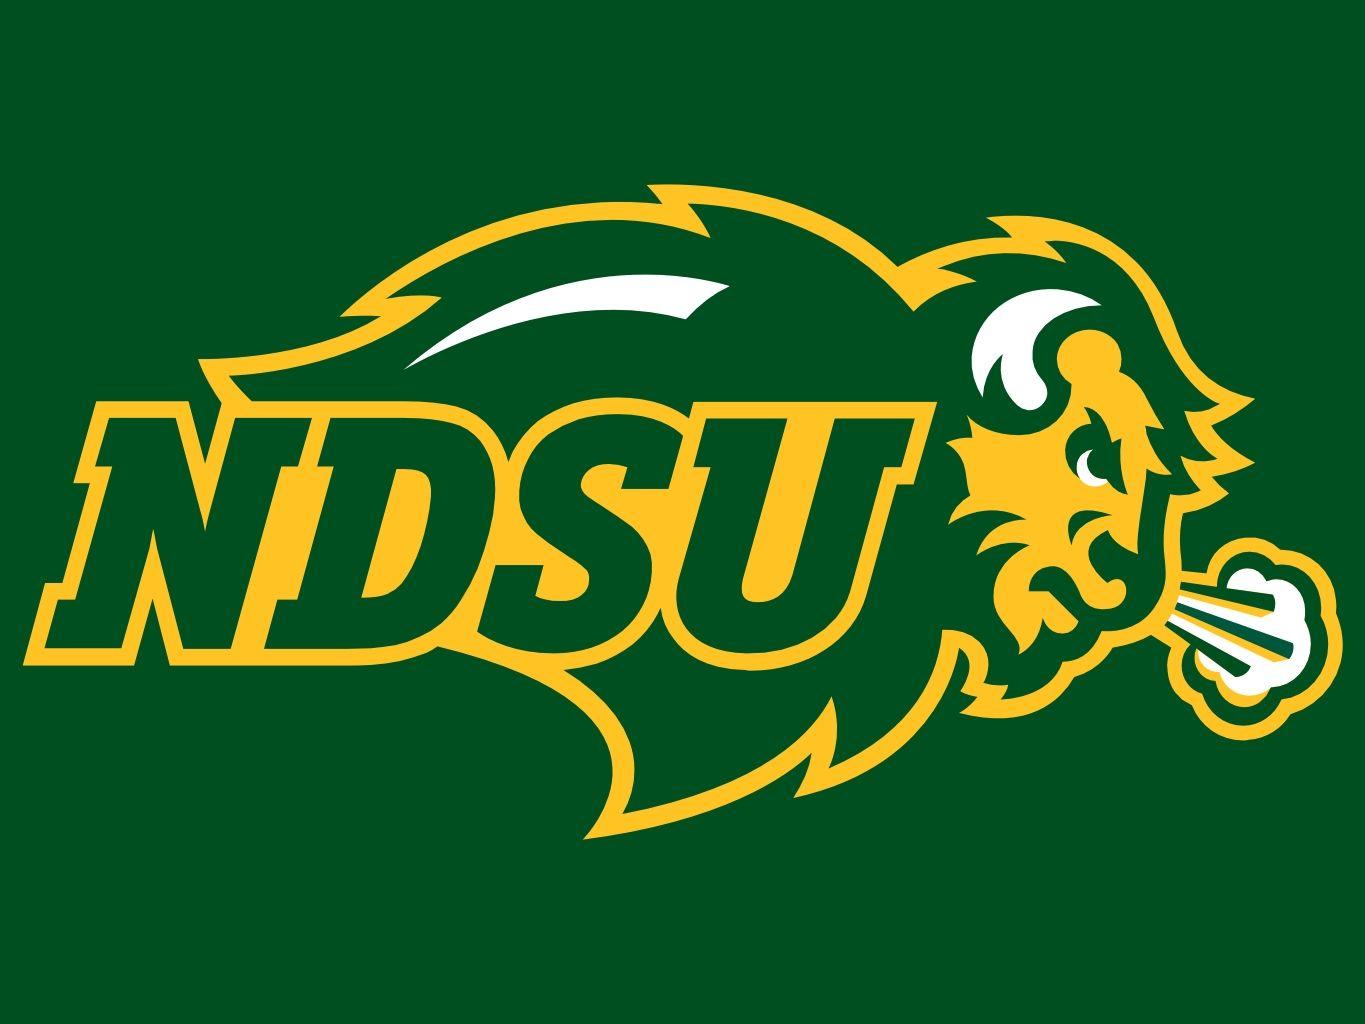 North Dakota State Bison Logo - North Dakota State Bison | NCAA Football Wiki | FANDOM powered by Wikia